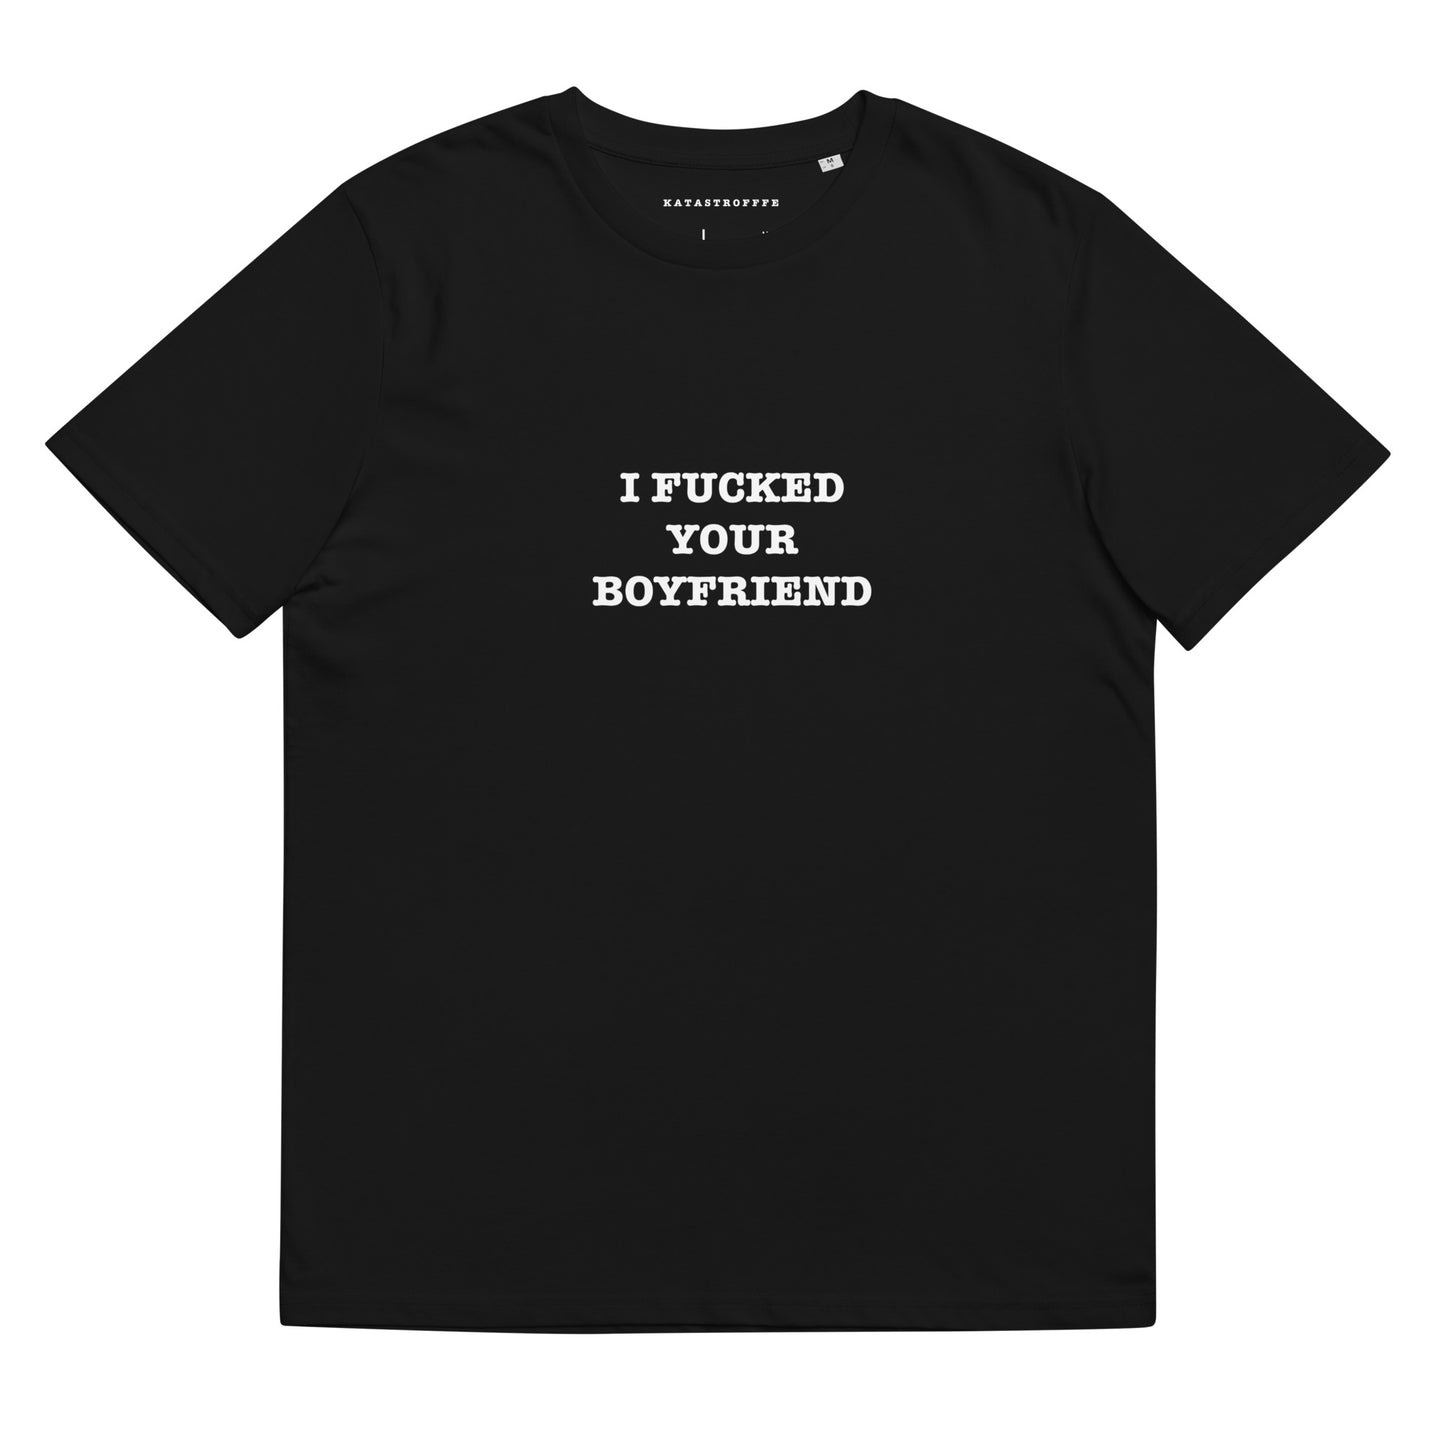 I FUCKED YOUR BOYFRIEND Katastrofffe Unisex organic cotton t-shirt